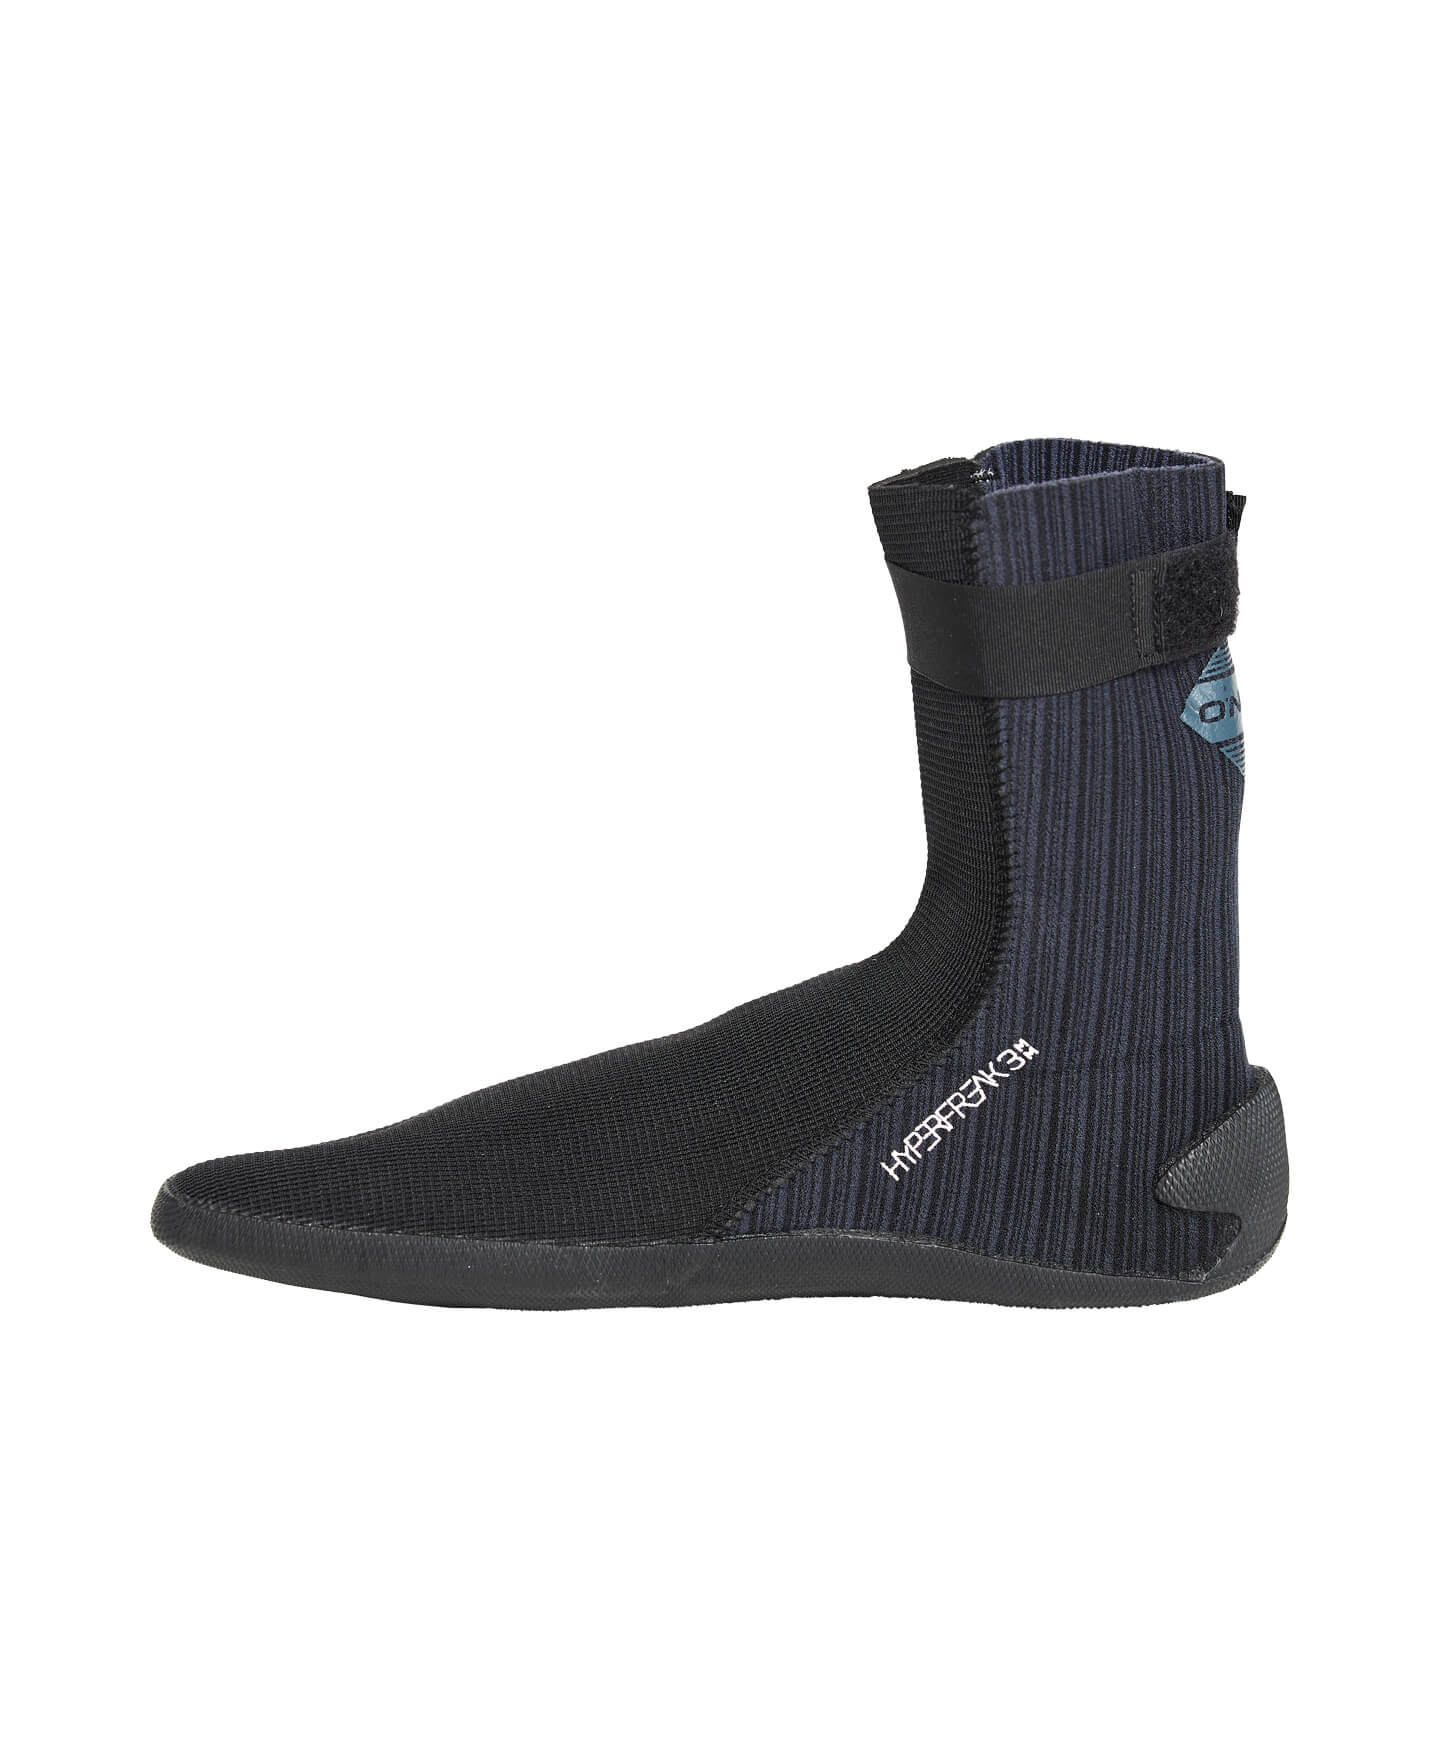 Hyperfreak Ninja 3mm Split Toe Wetsuit Boot - Black